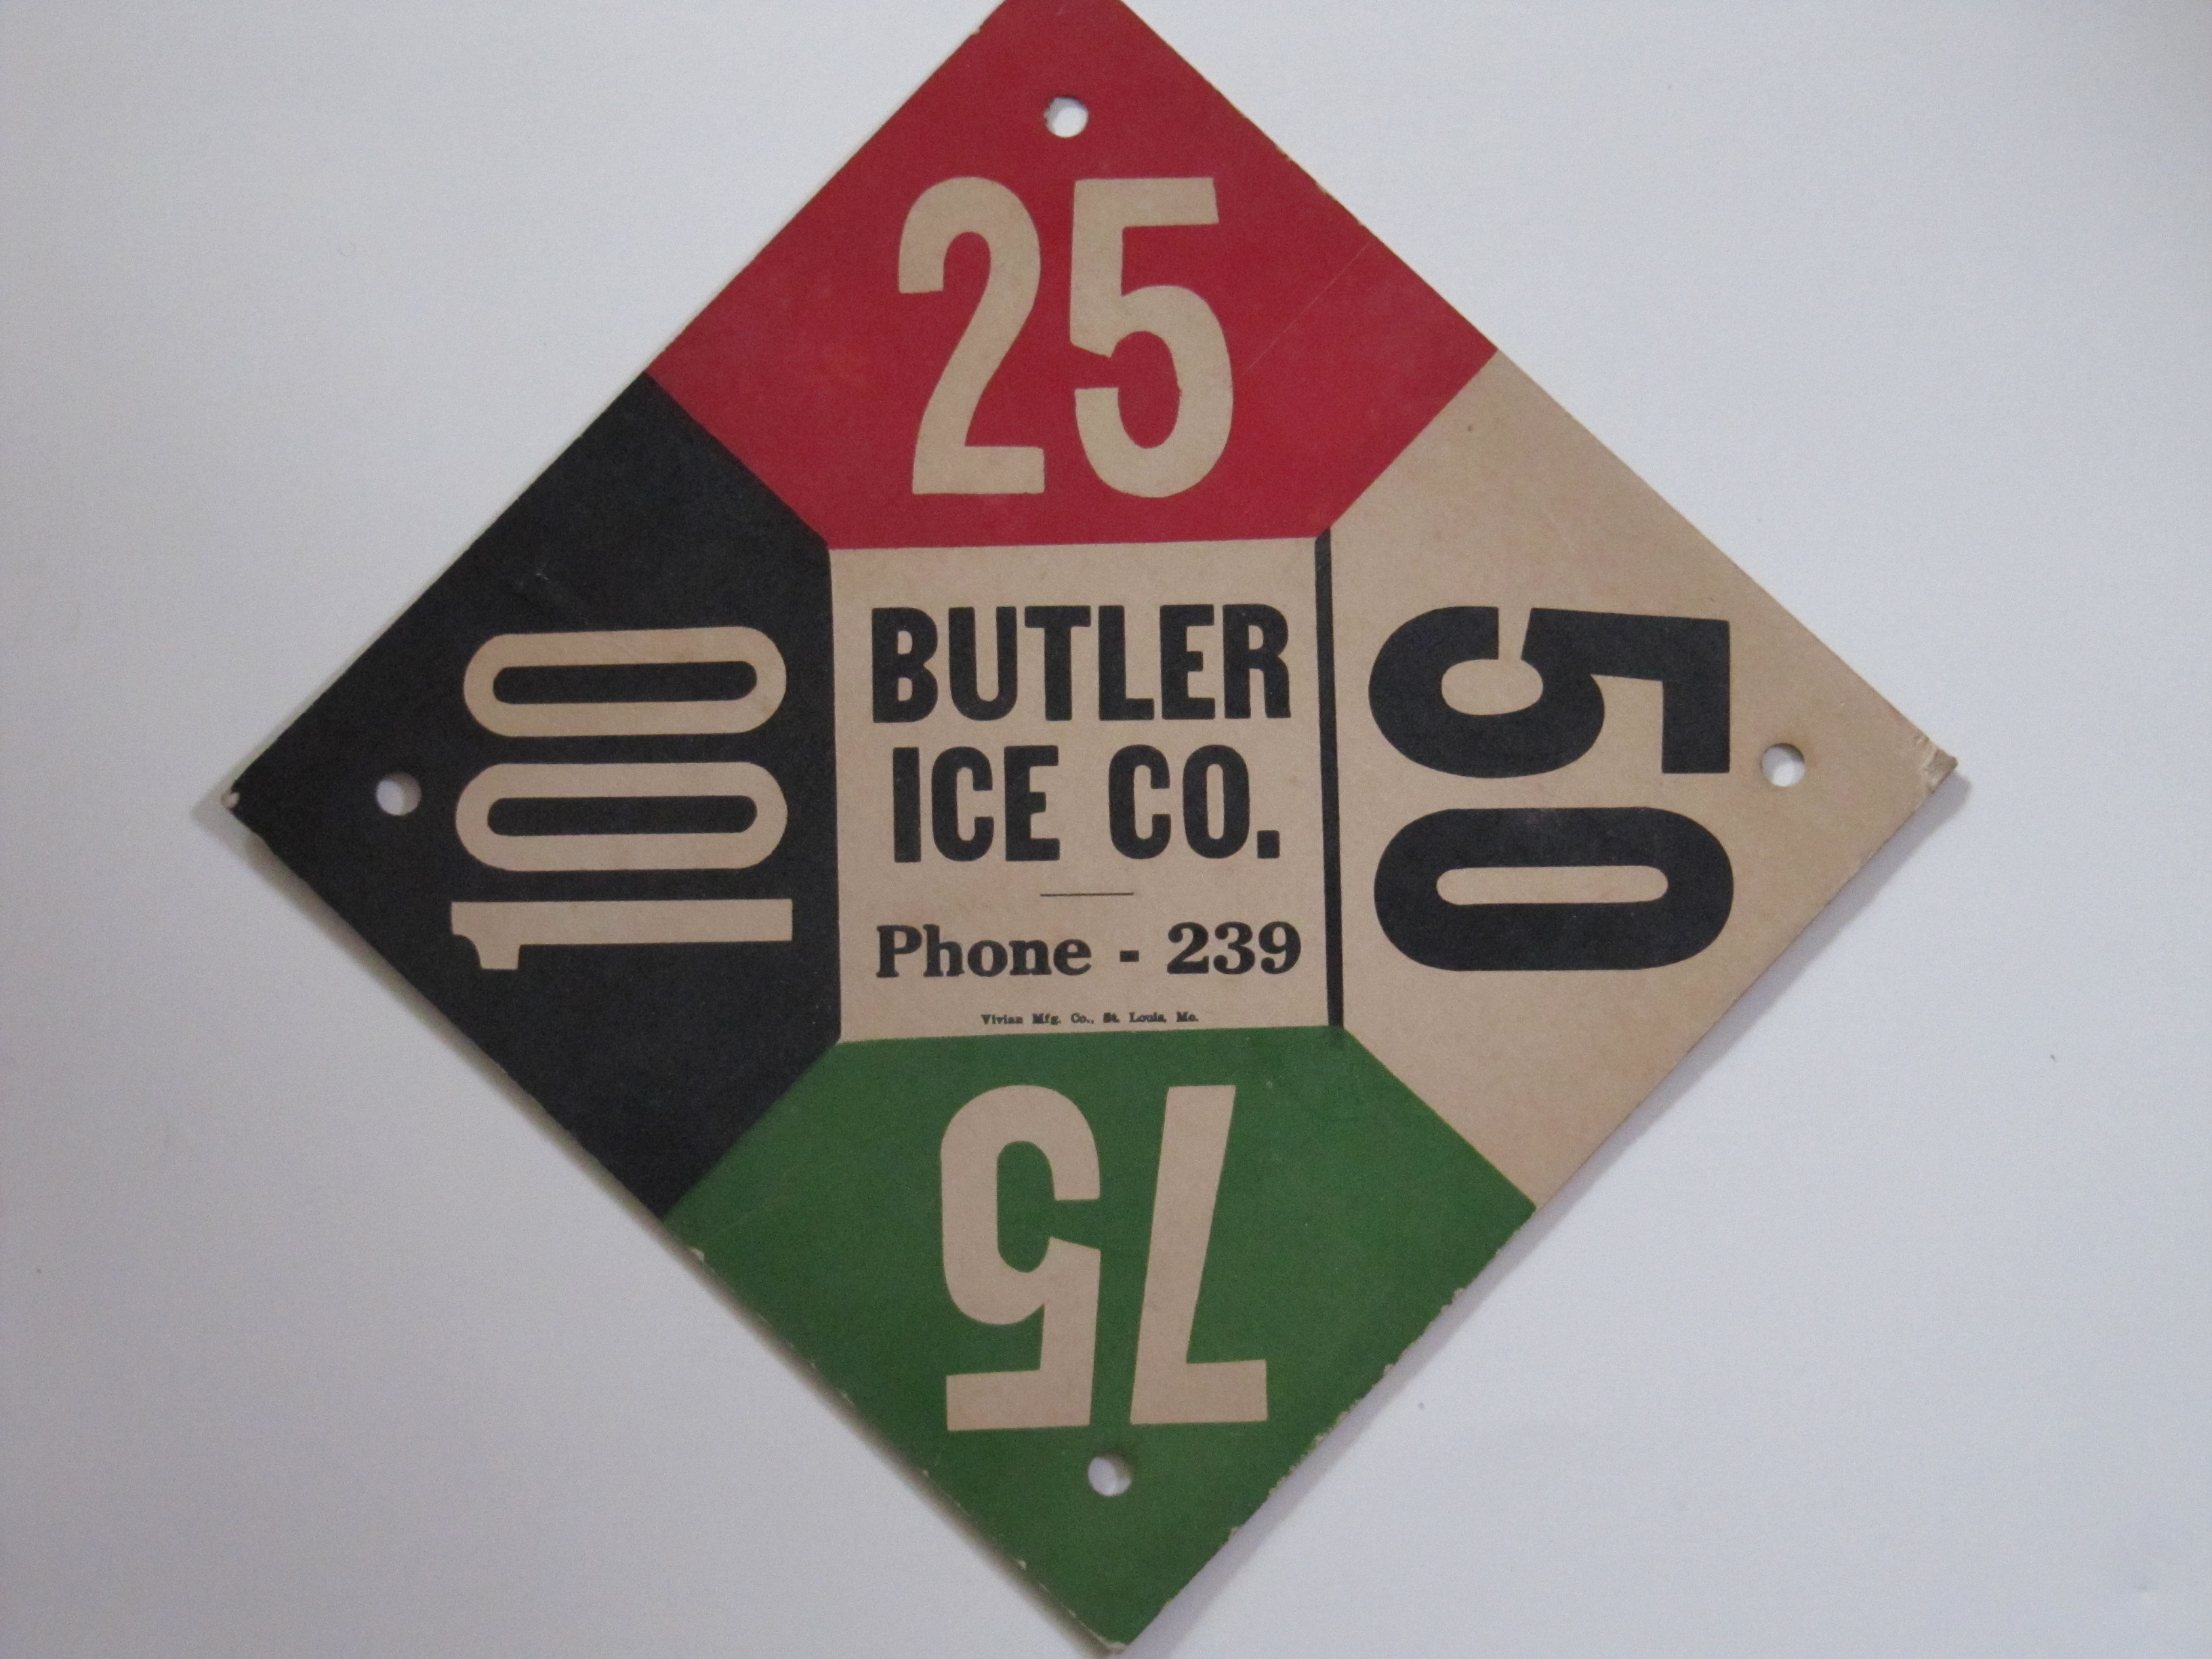 Butler Ice Co.